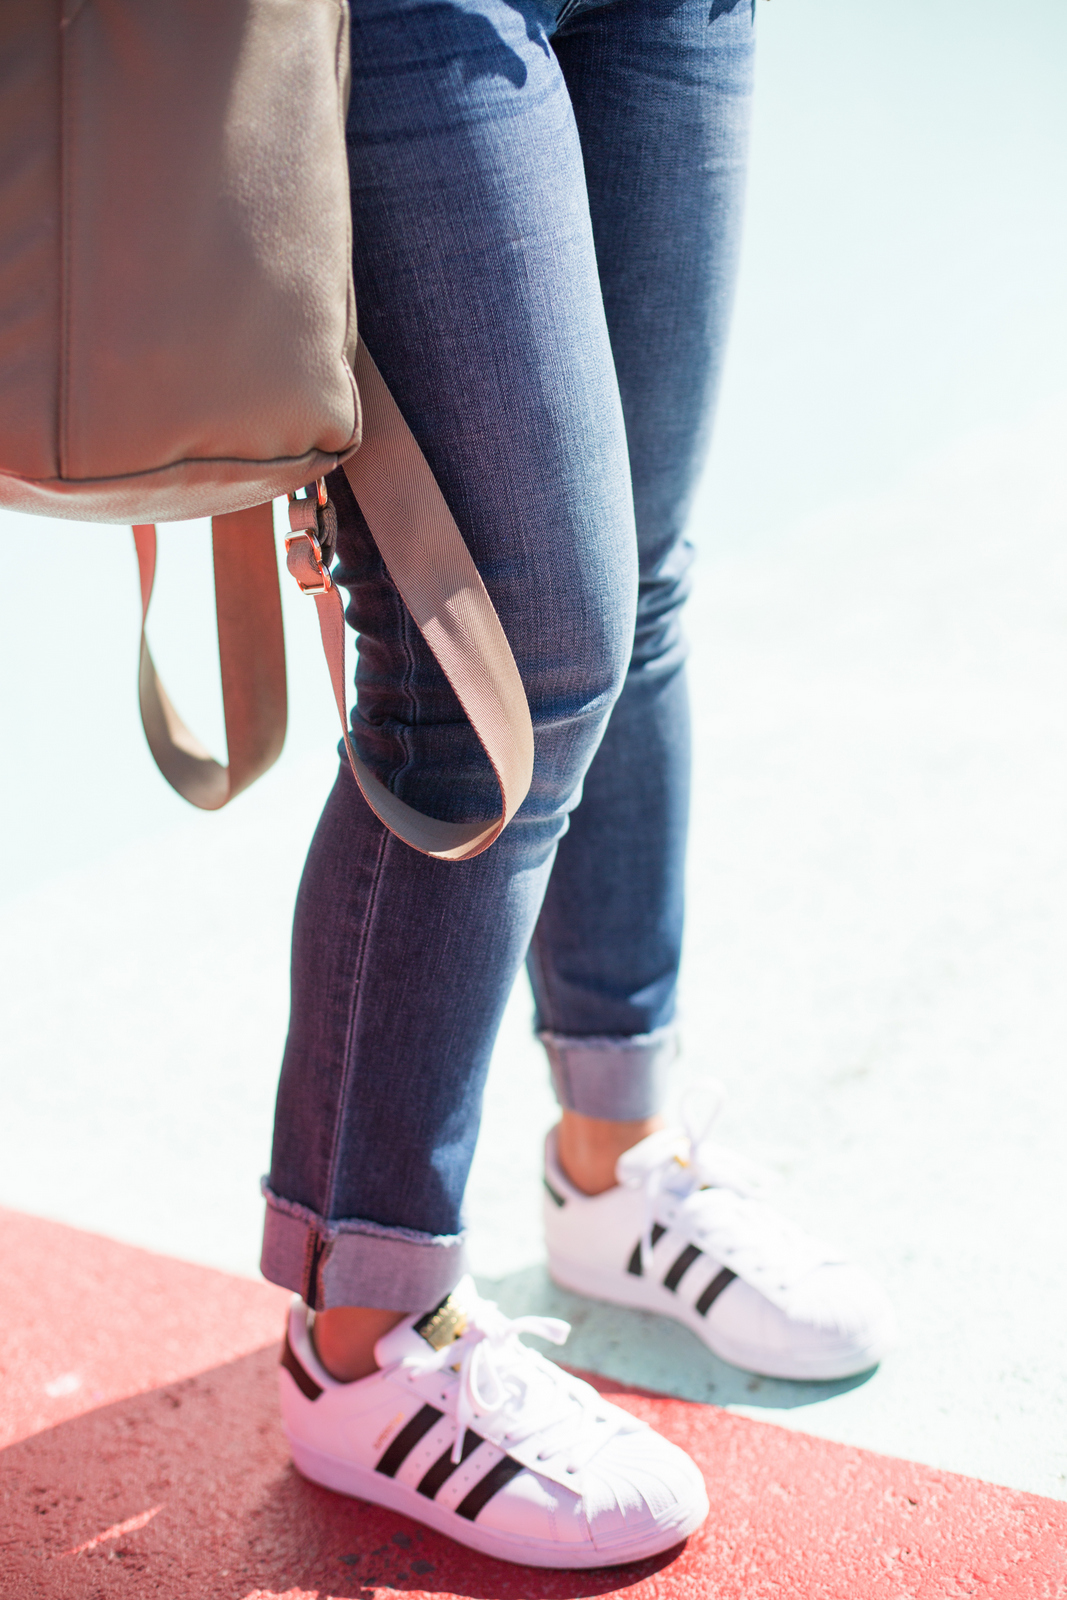 Boyfriend Denim Jeans Two Ways: Dressed Down and Up by Utah fashion blogger Sandy A La Mode